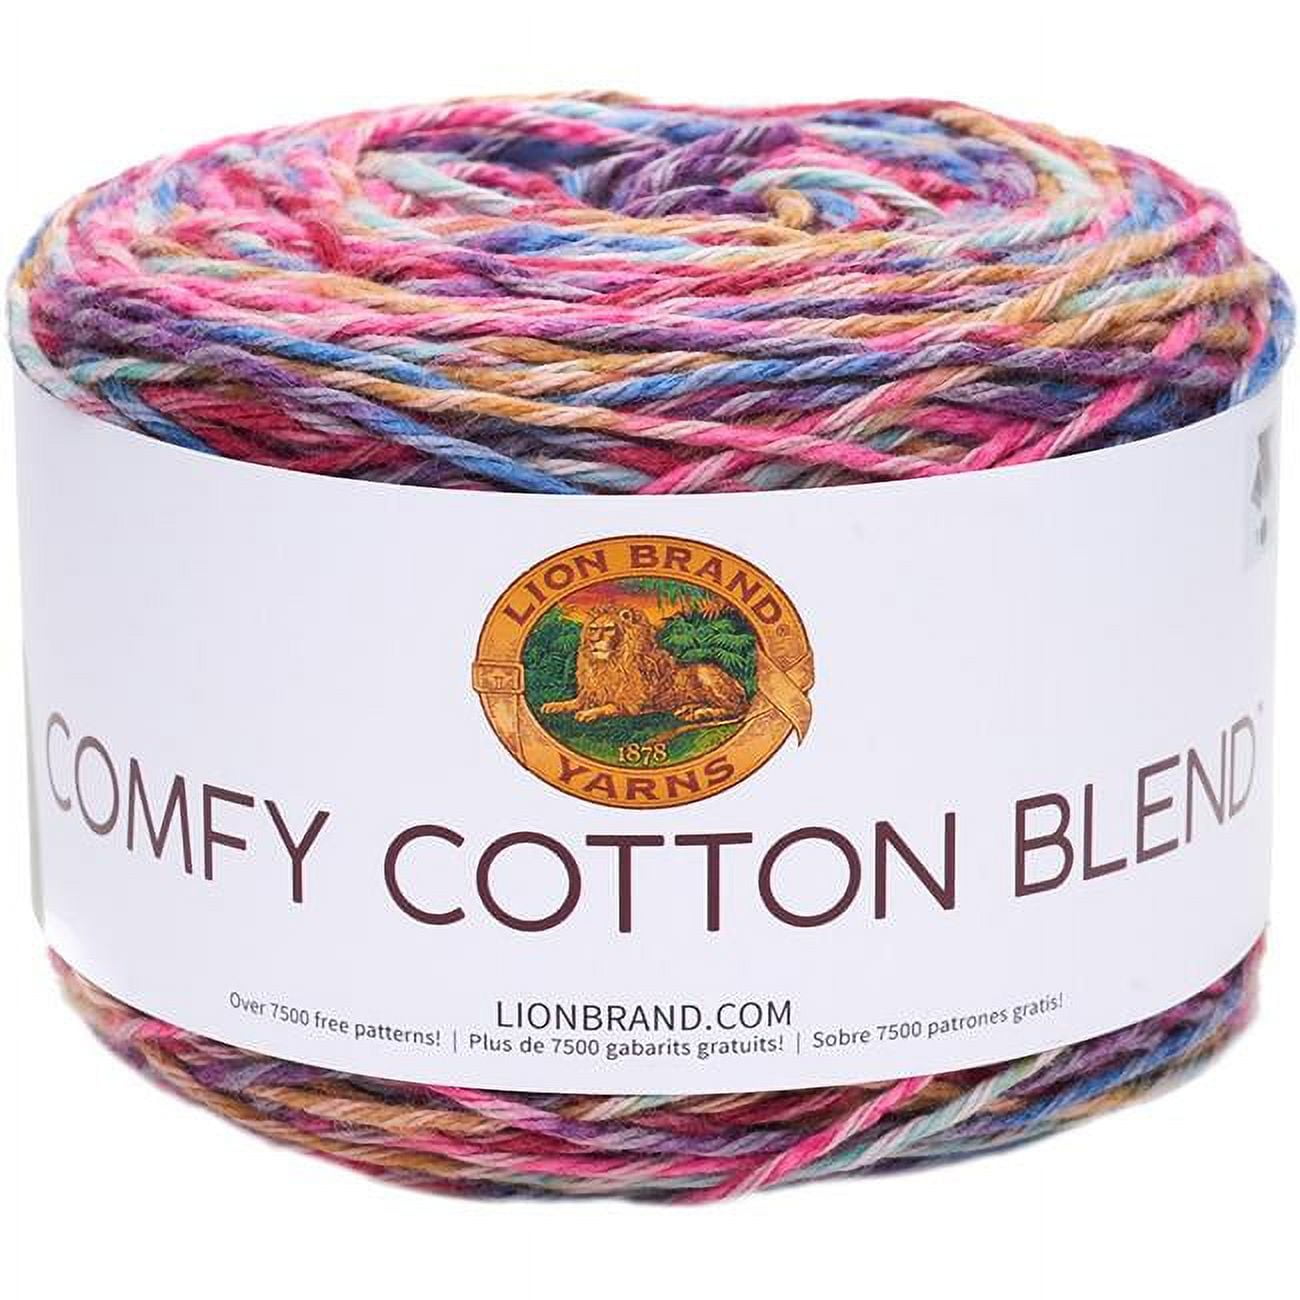 Lion Brand 392 Yd Comfy Cotton Blend Driftwood Yarn 